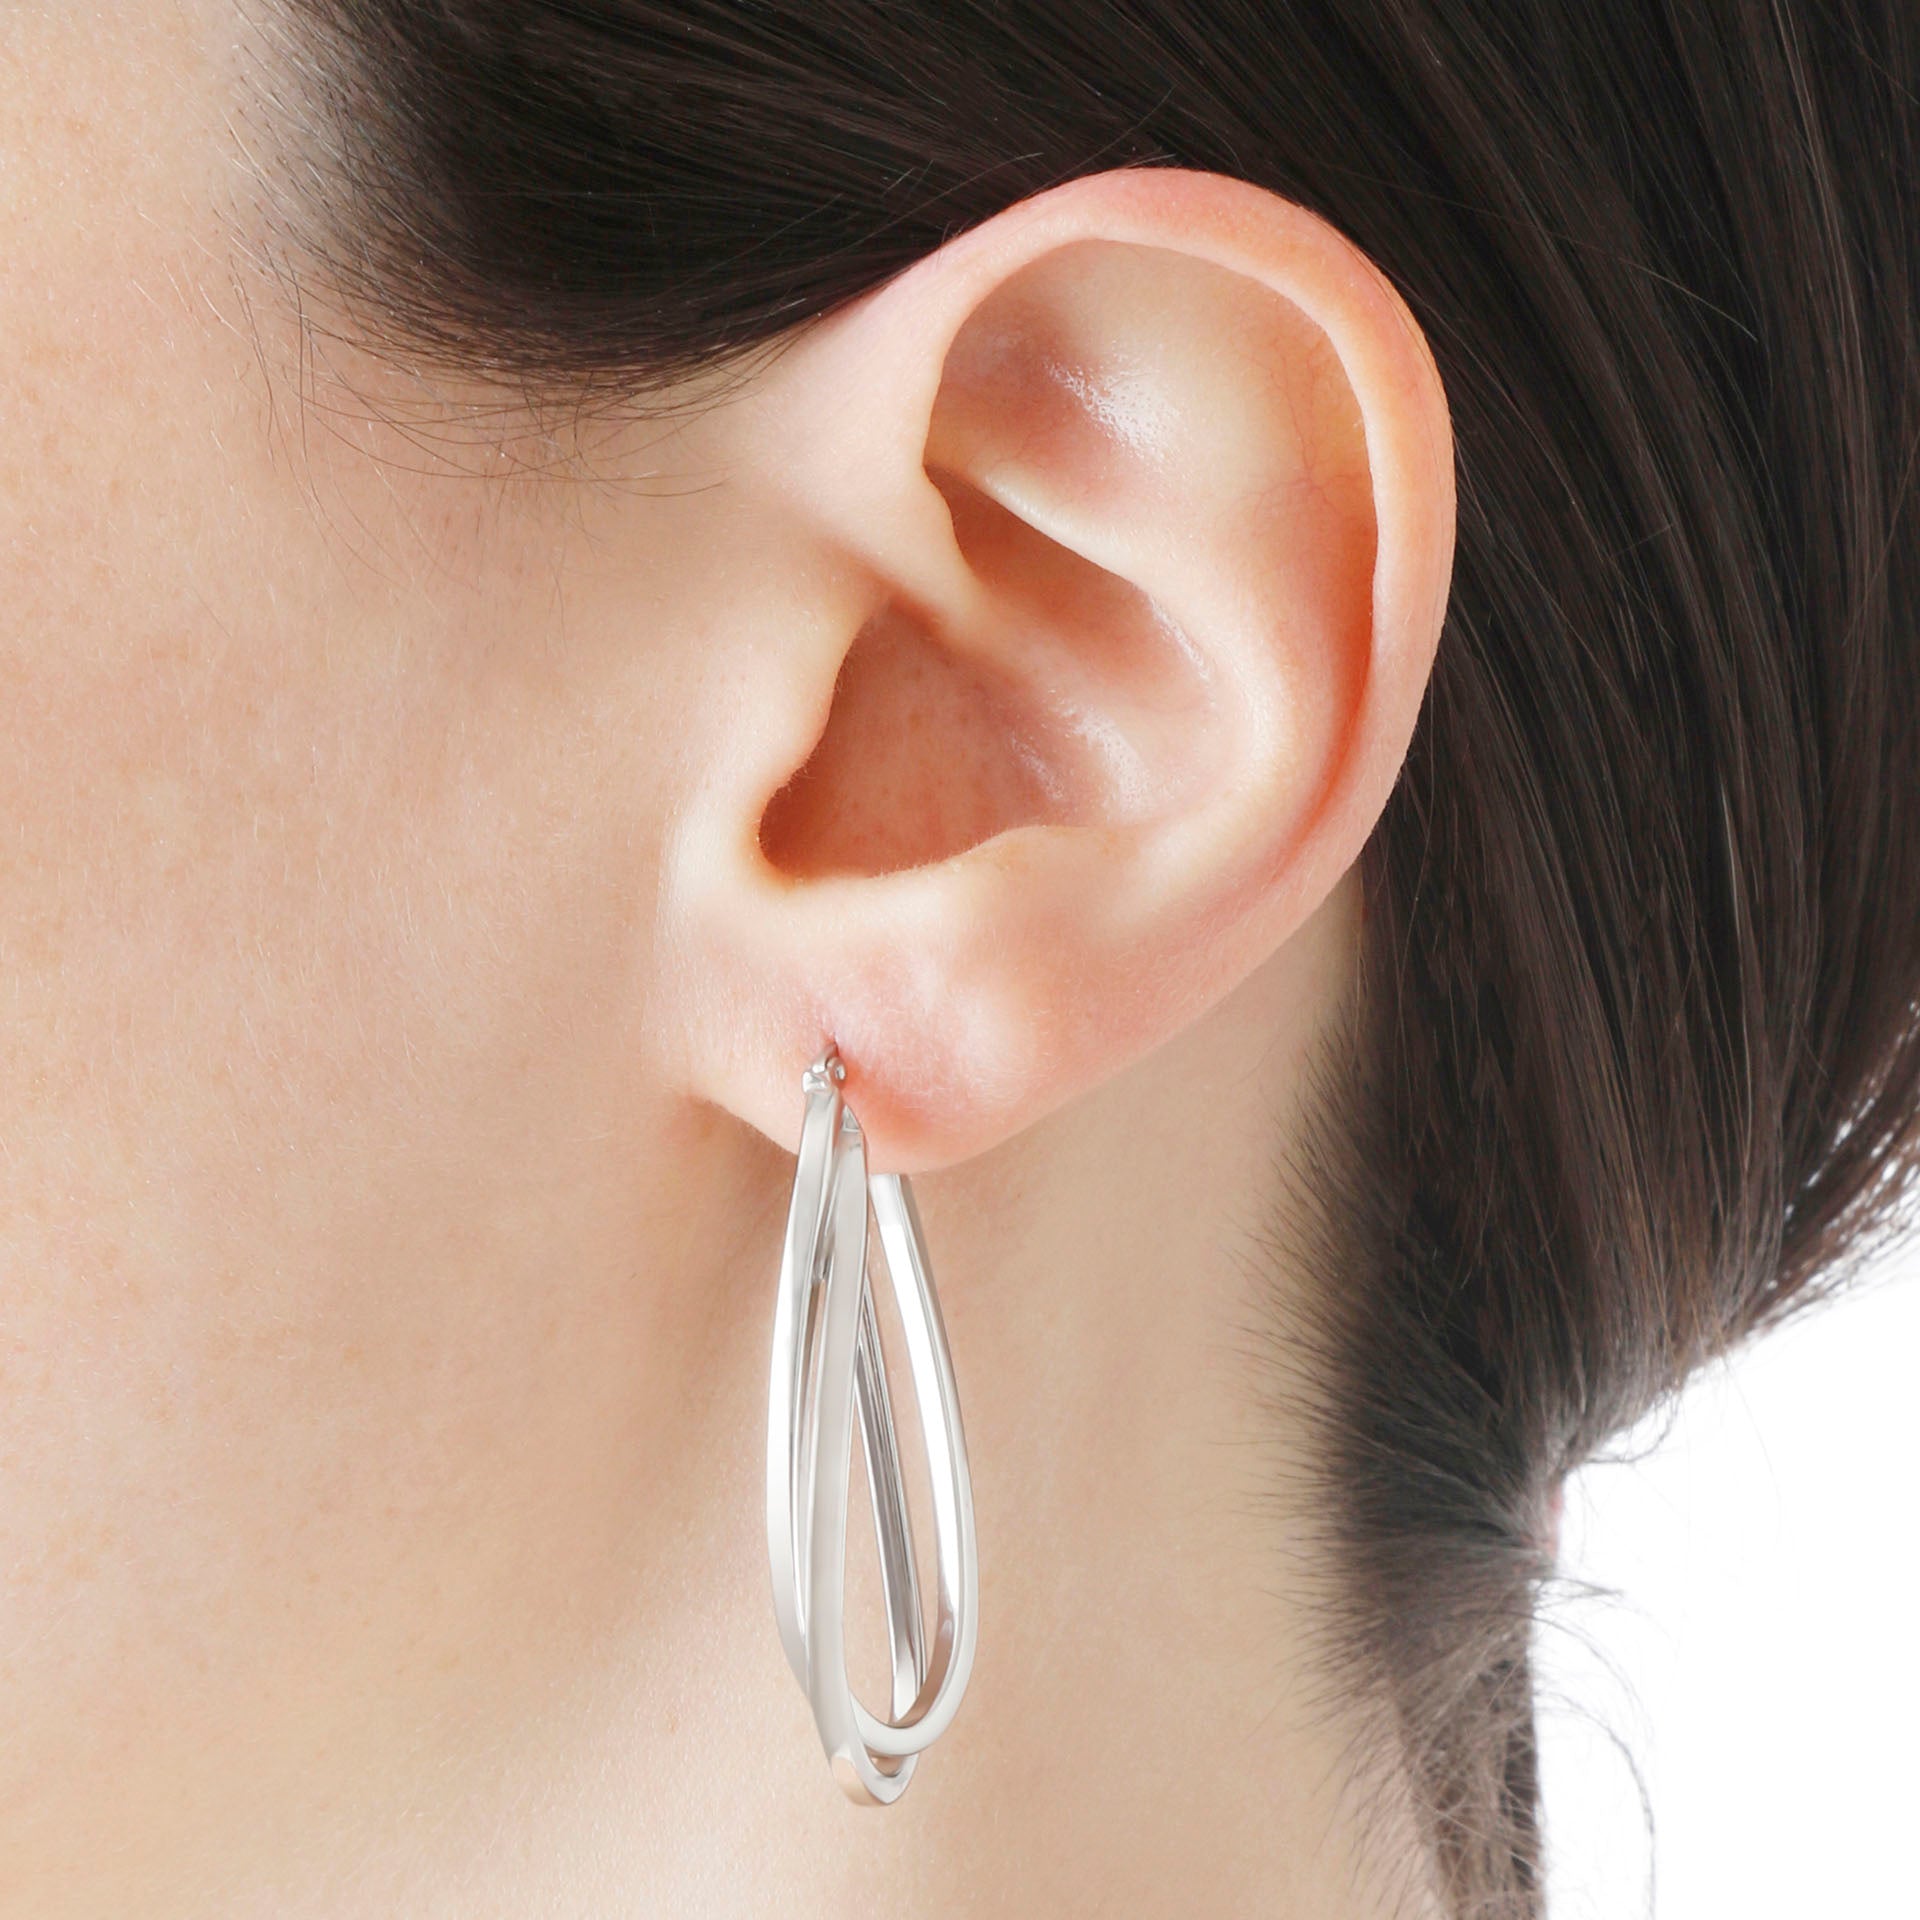 Statement Polished Hoop Earrings in Sterling Silver (3 x 67 mm)